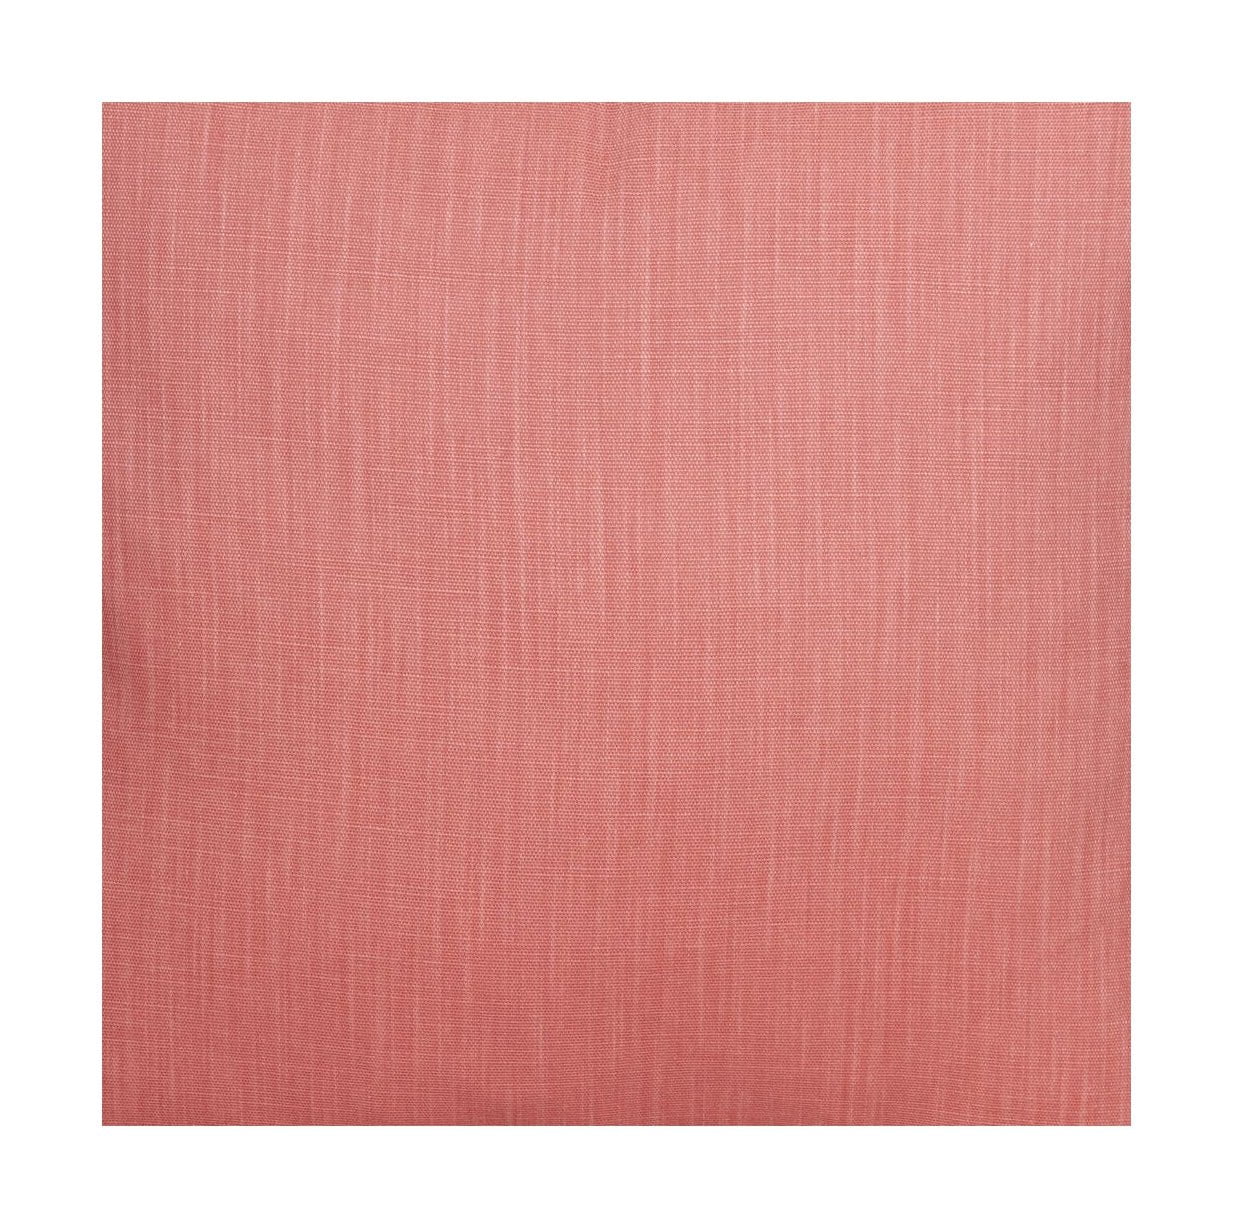 Spira Klotz Fabric Width 150 Cm (Price Per Meter), Rouge